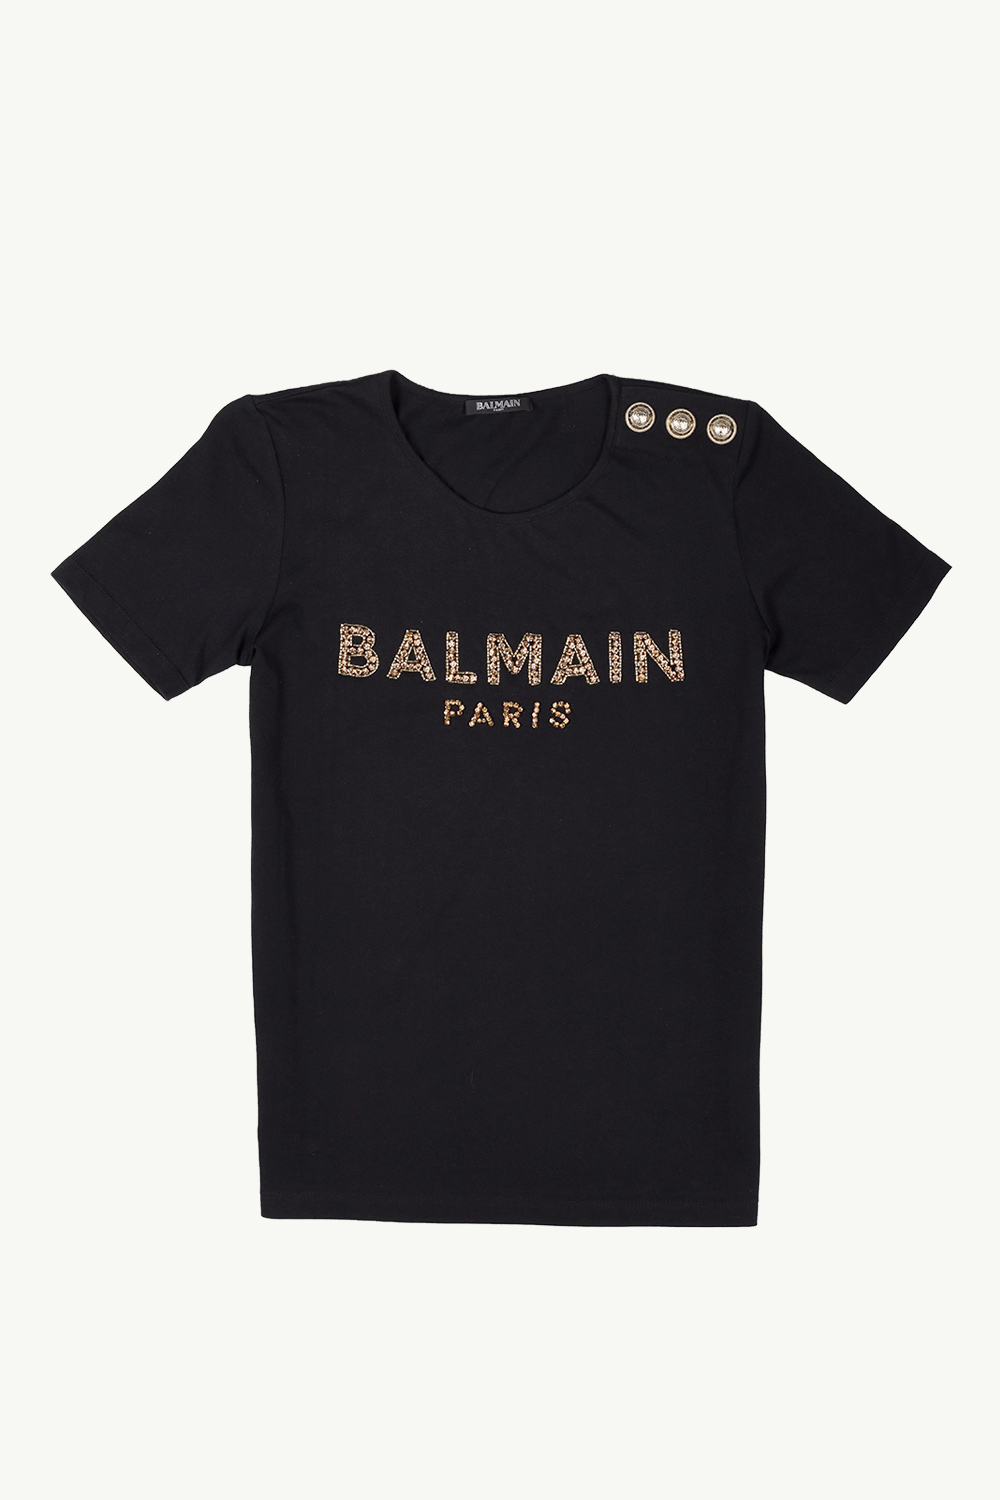 BALMAIN Women 3 Buttons Balmain Paris Rhinestone Logo T-Shirt Black/Gold 0